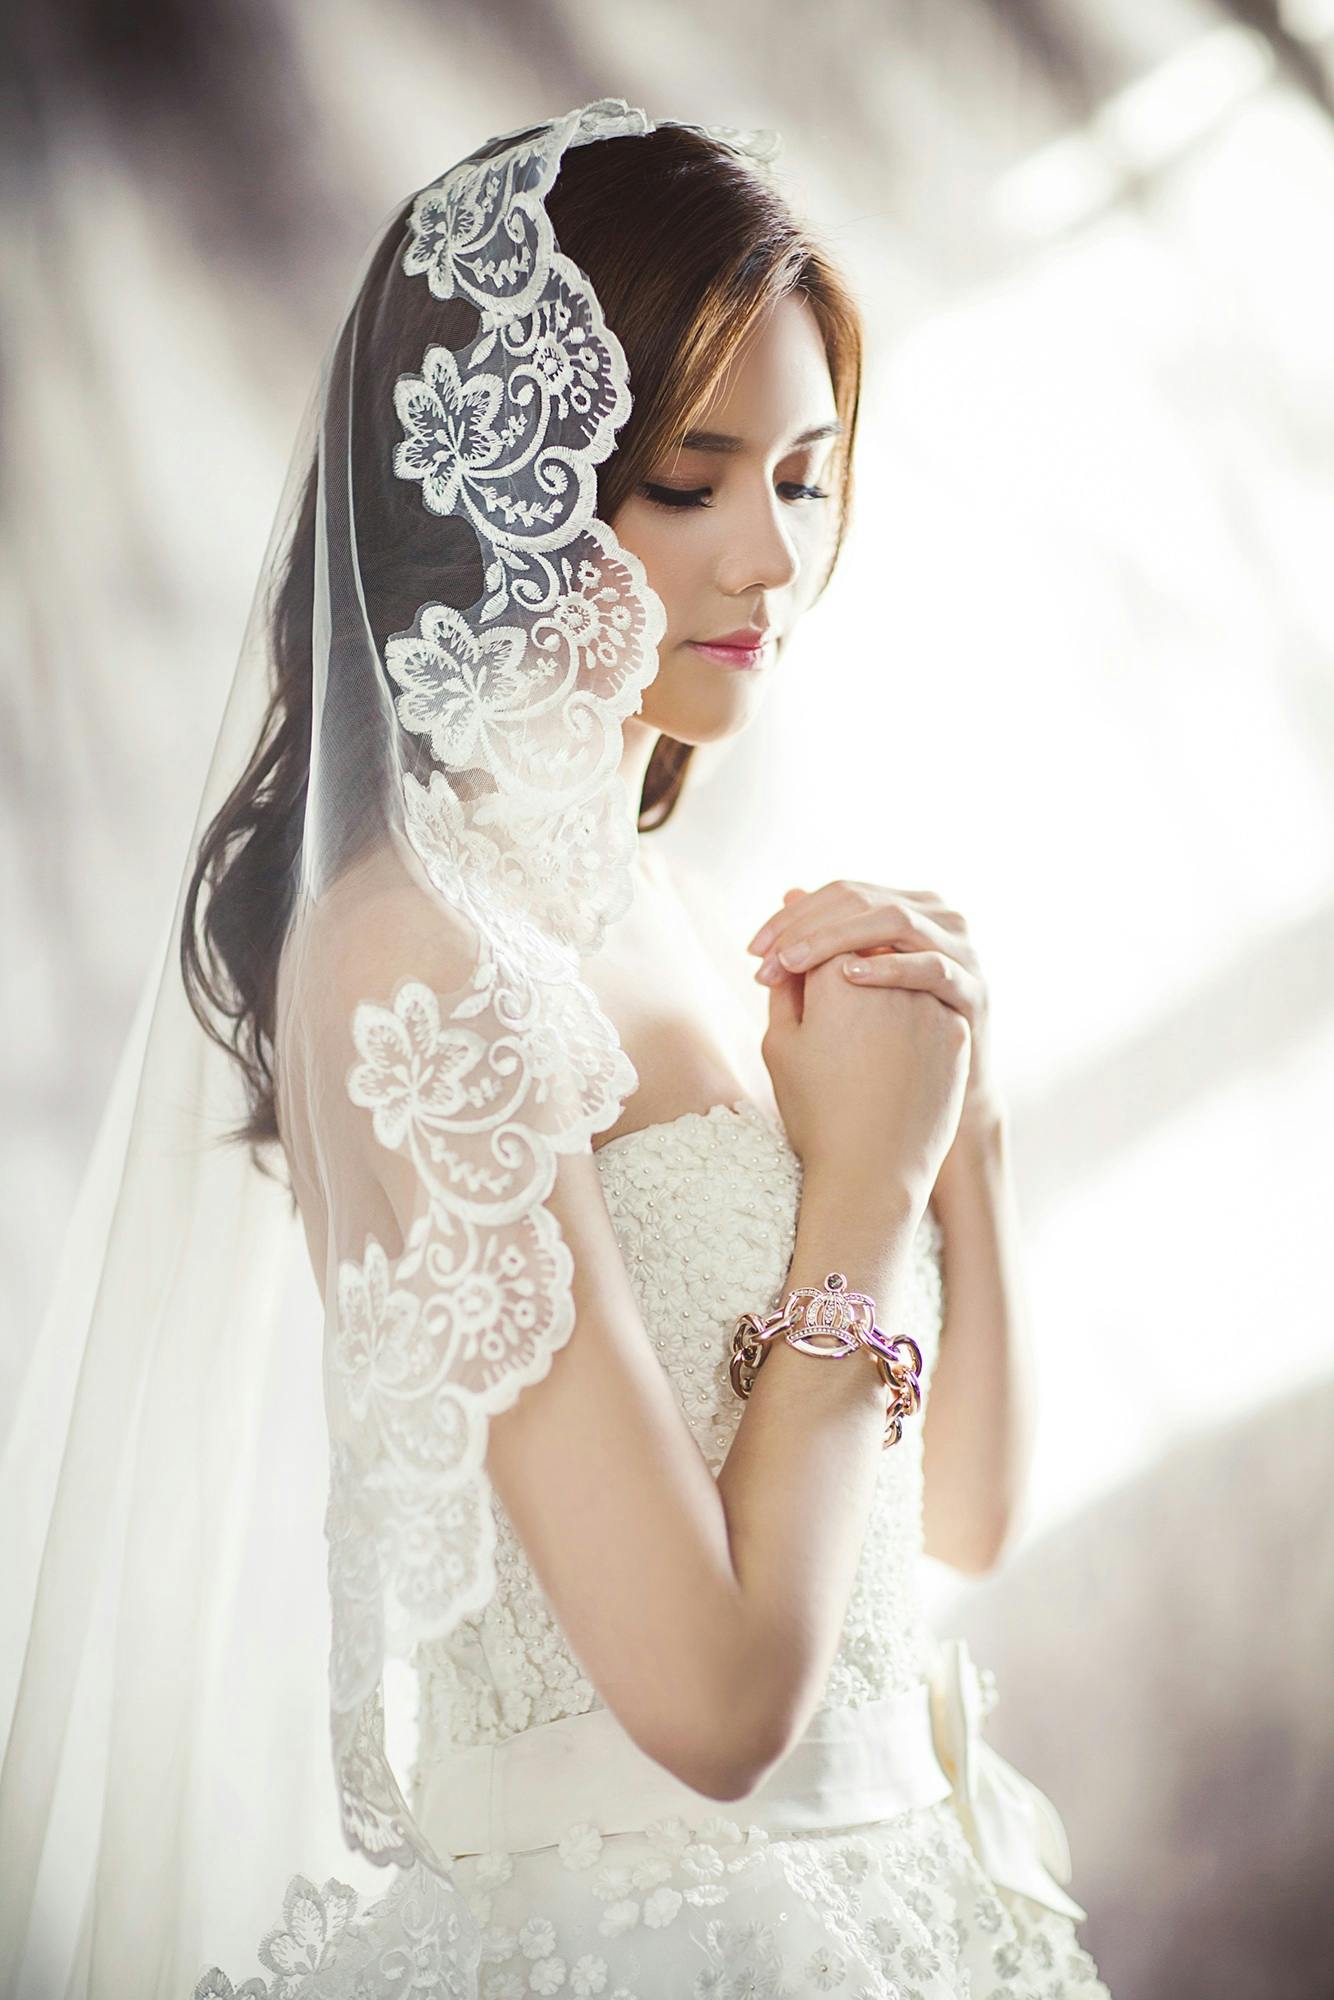 A bride in her wedding dress | Source: Pexels